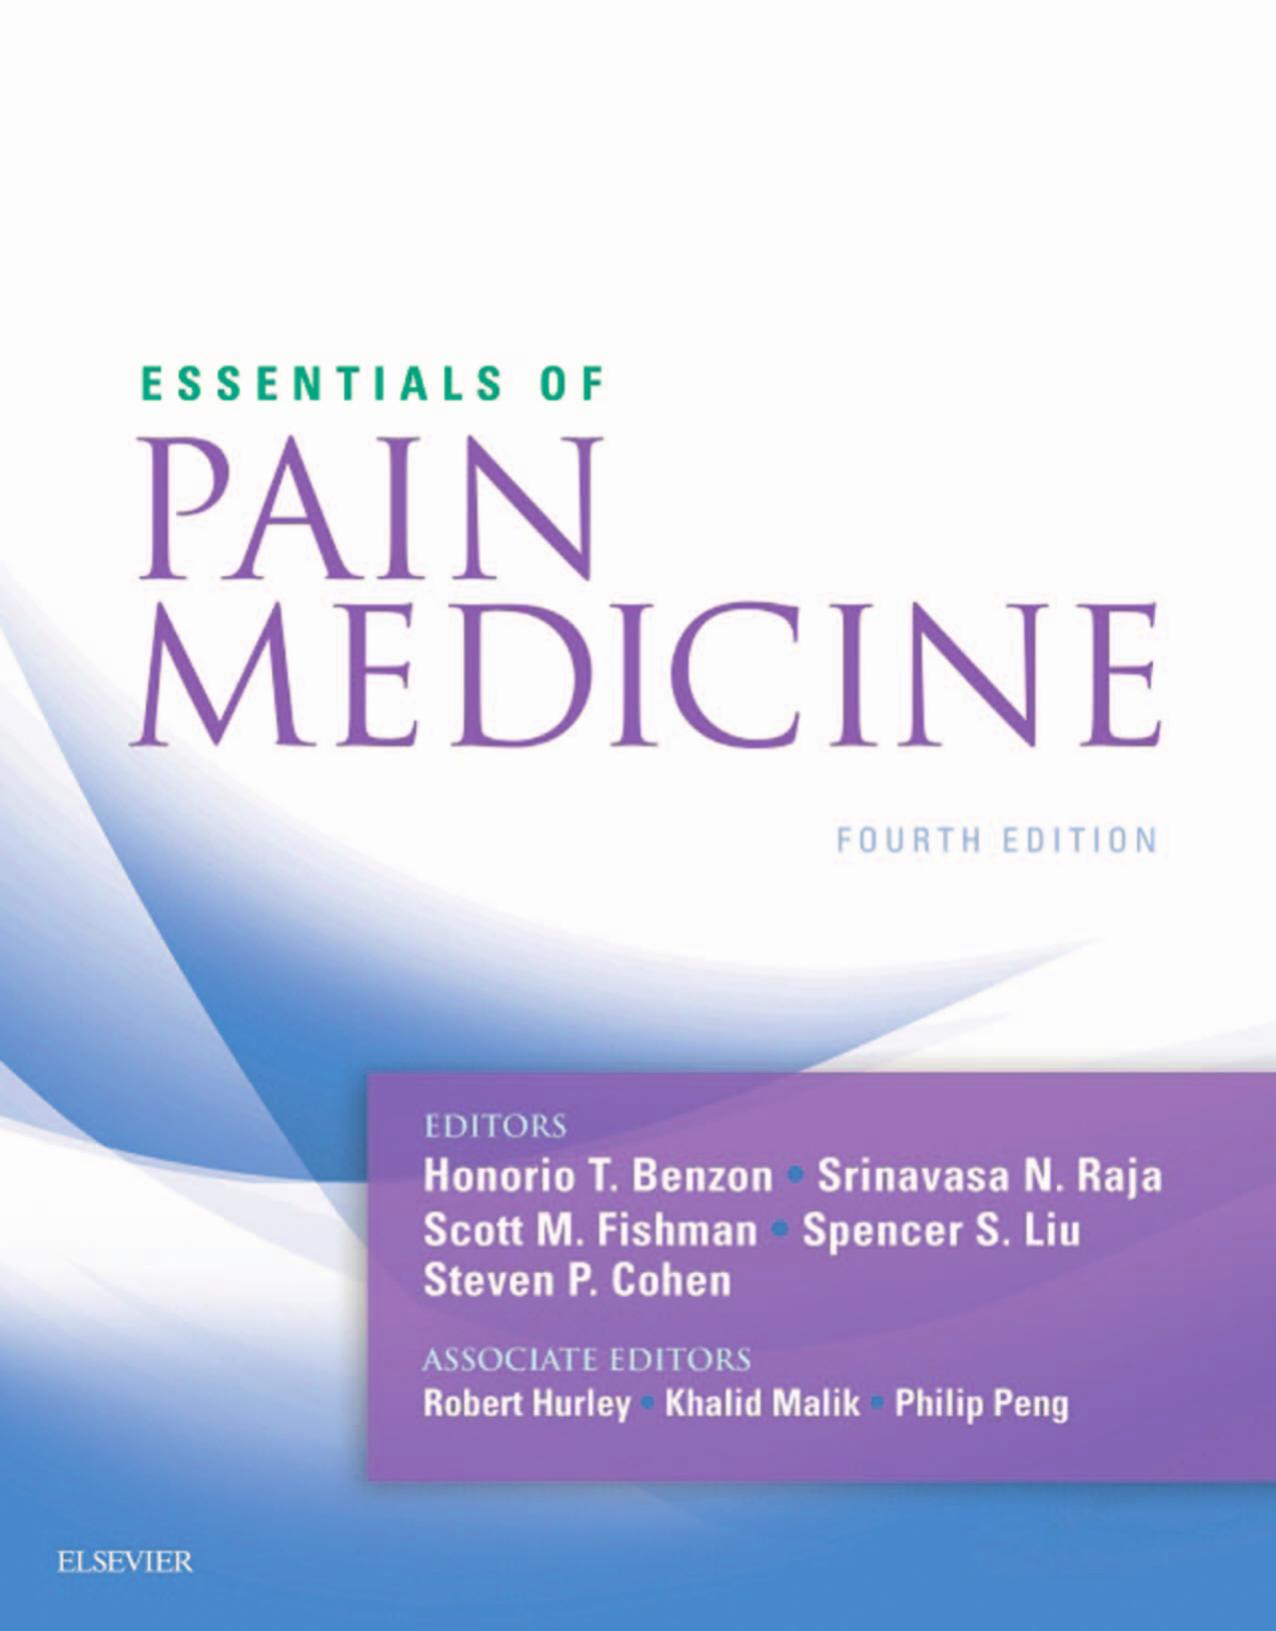 Essentials of Pain Medicine ( PDFDrive )